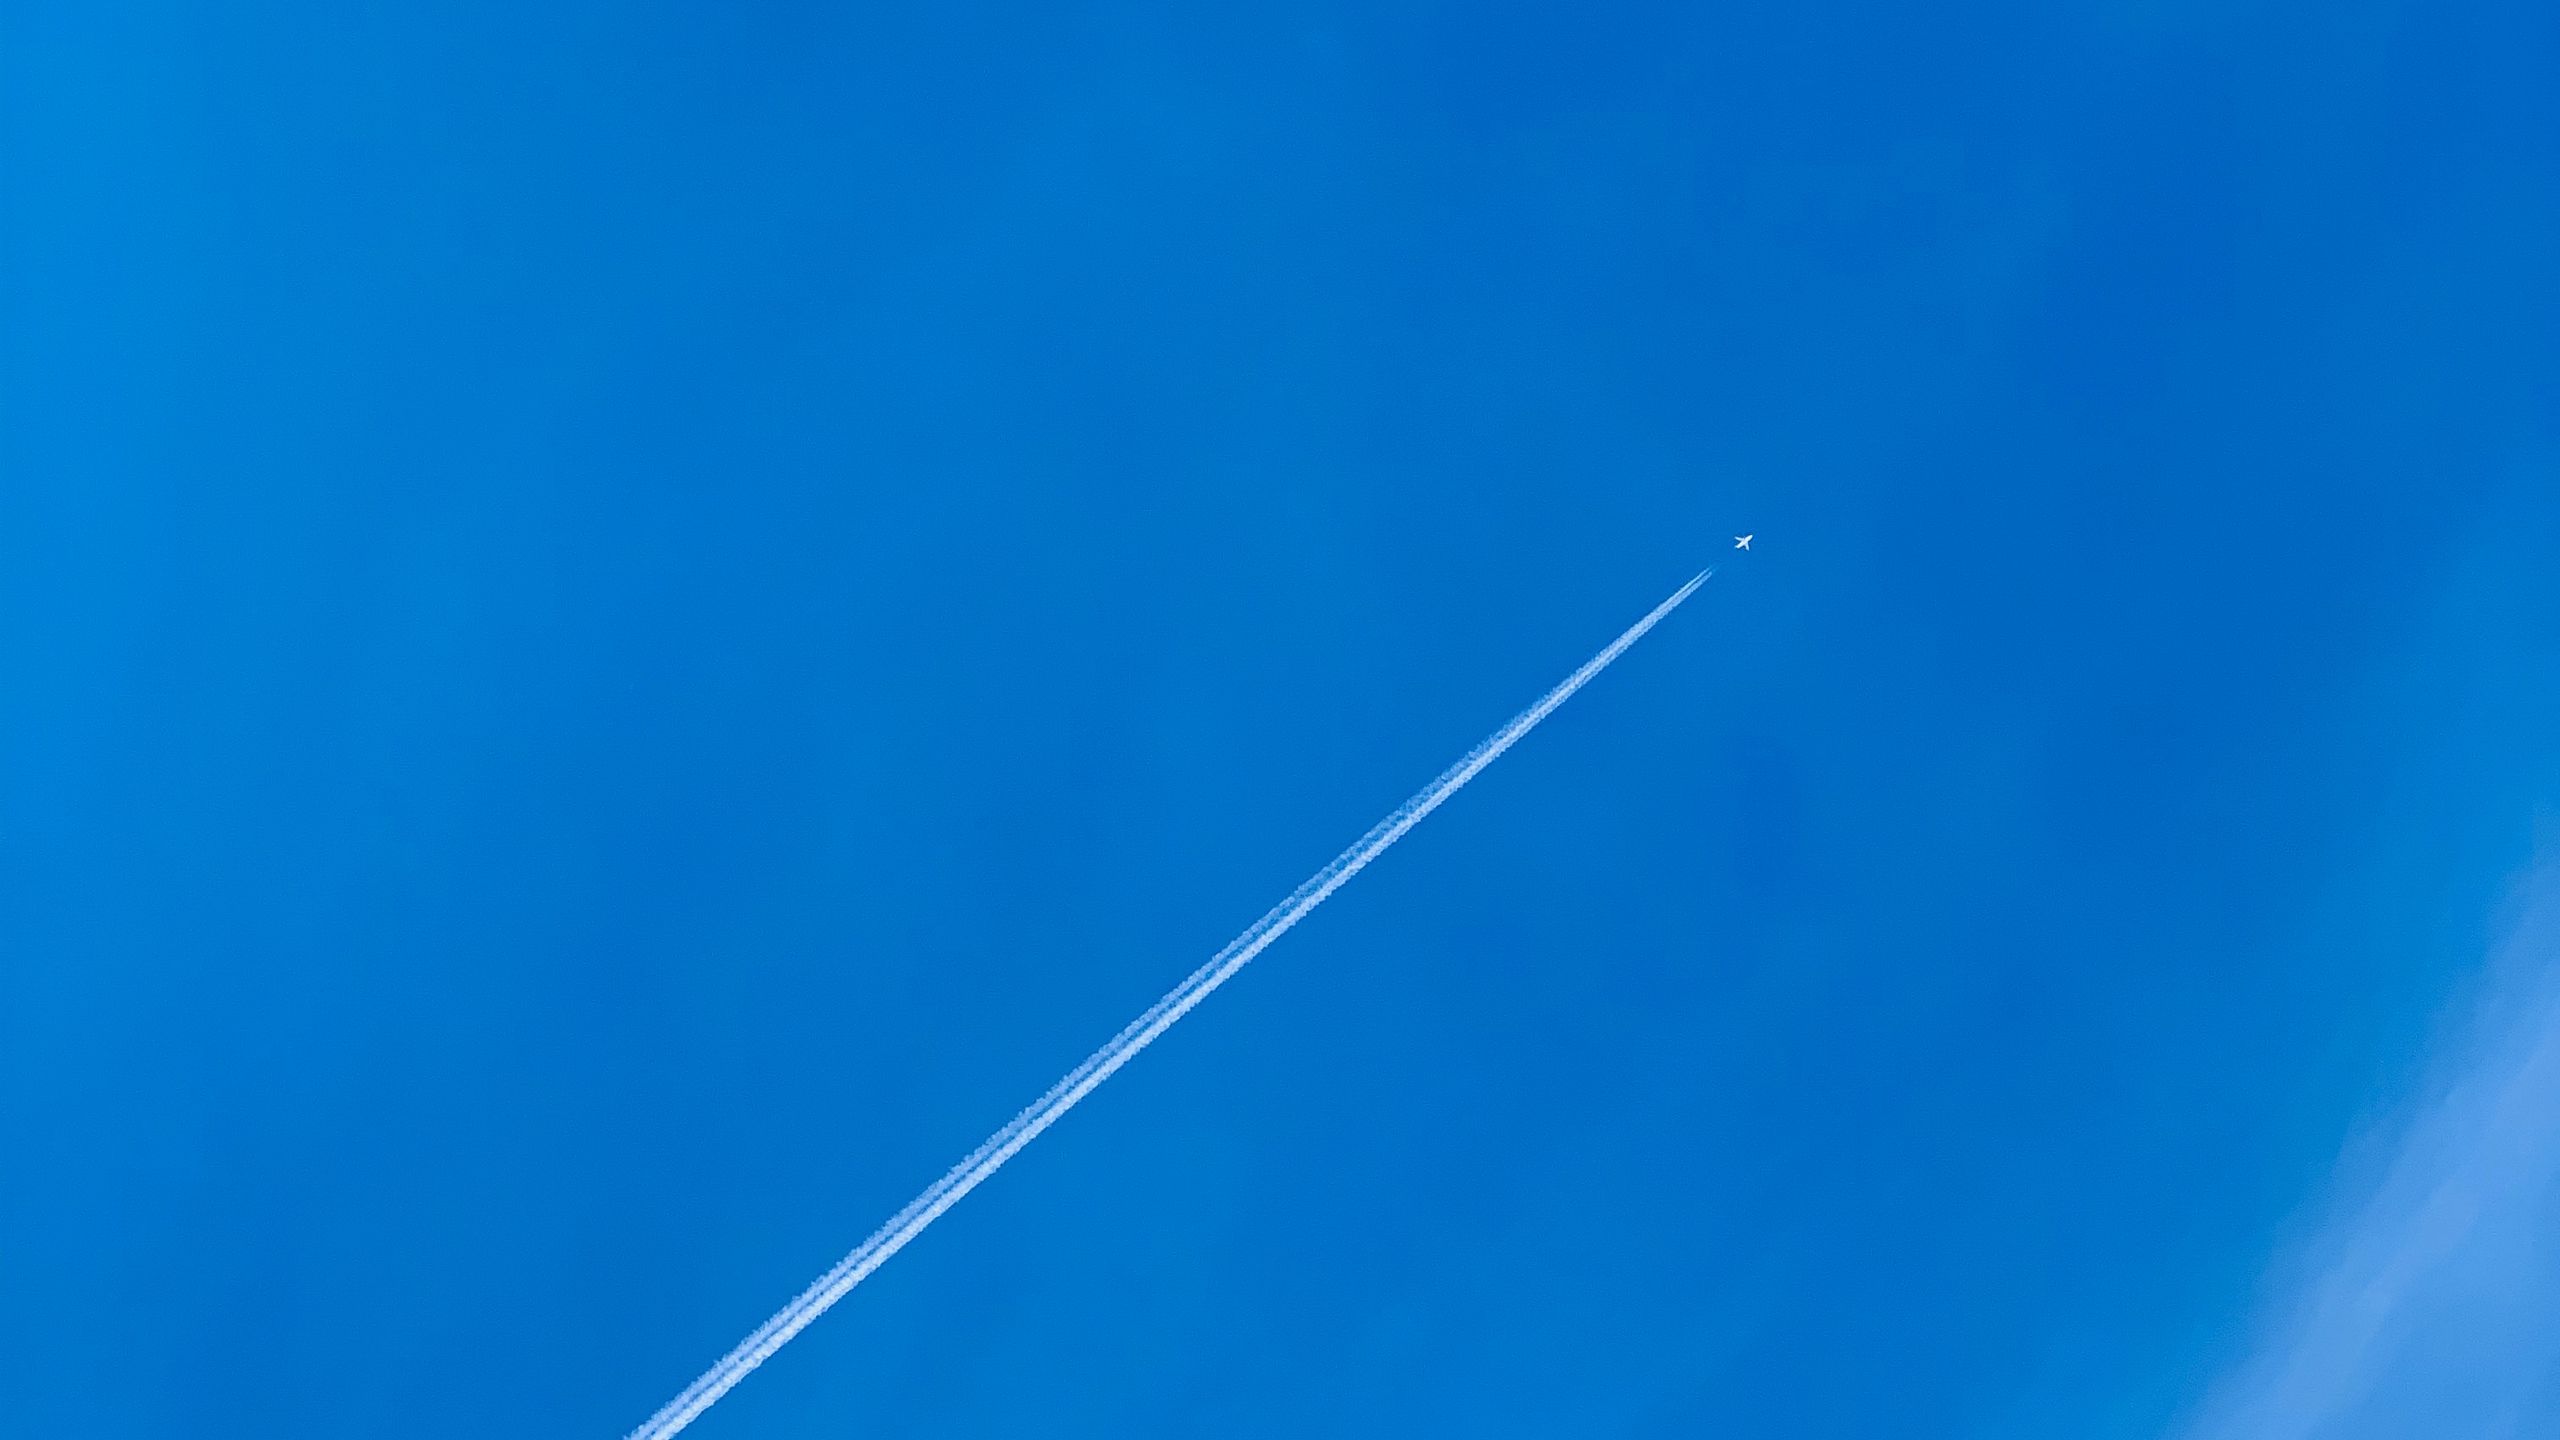 Download wallpaper 2560x1440 airplane, sky, minimalism, airplane track ...